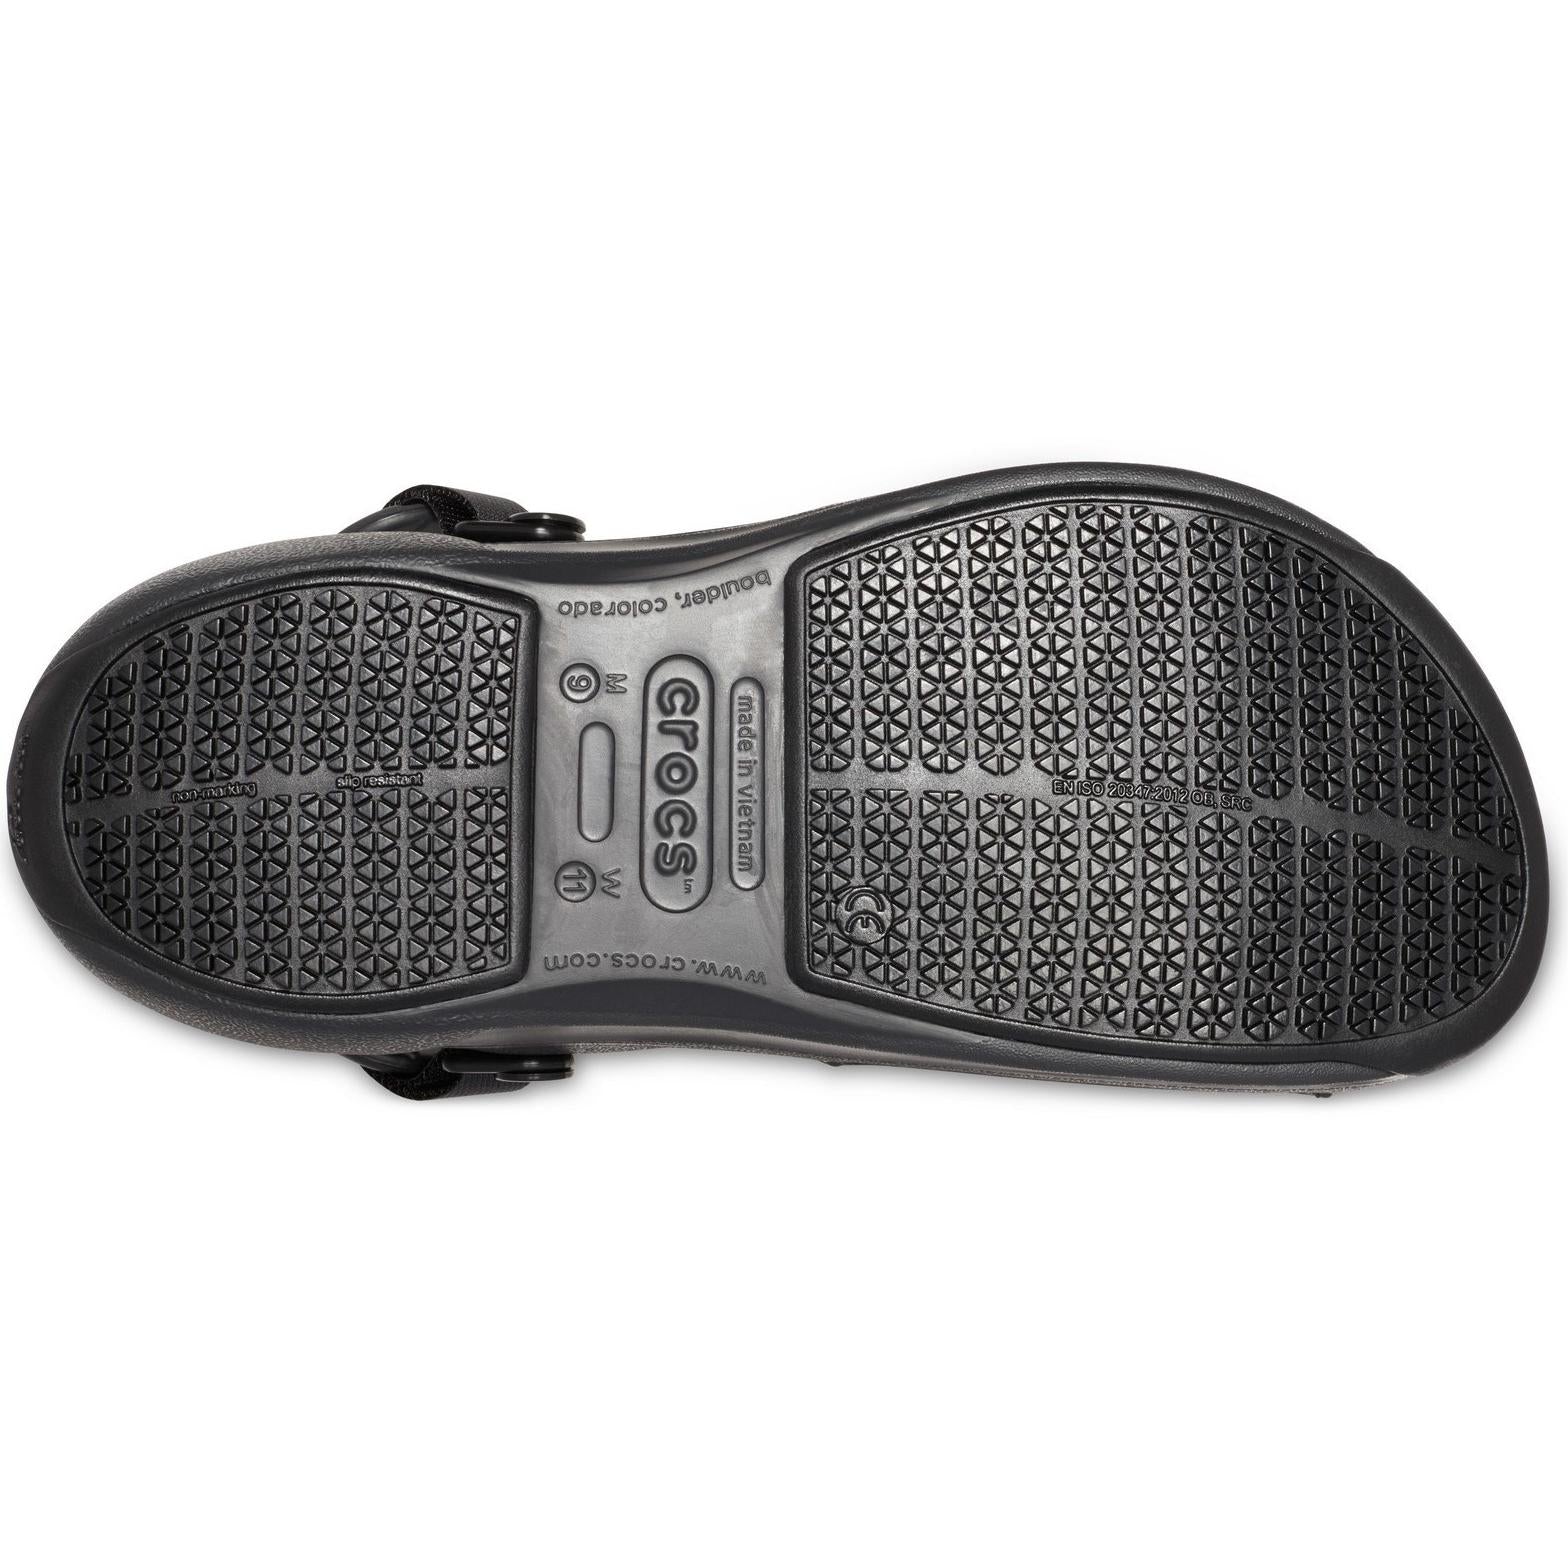 Crocs Bistro Pro Literide Clog Slip On Sandals